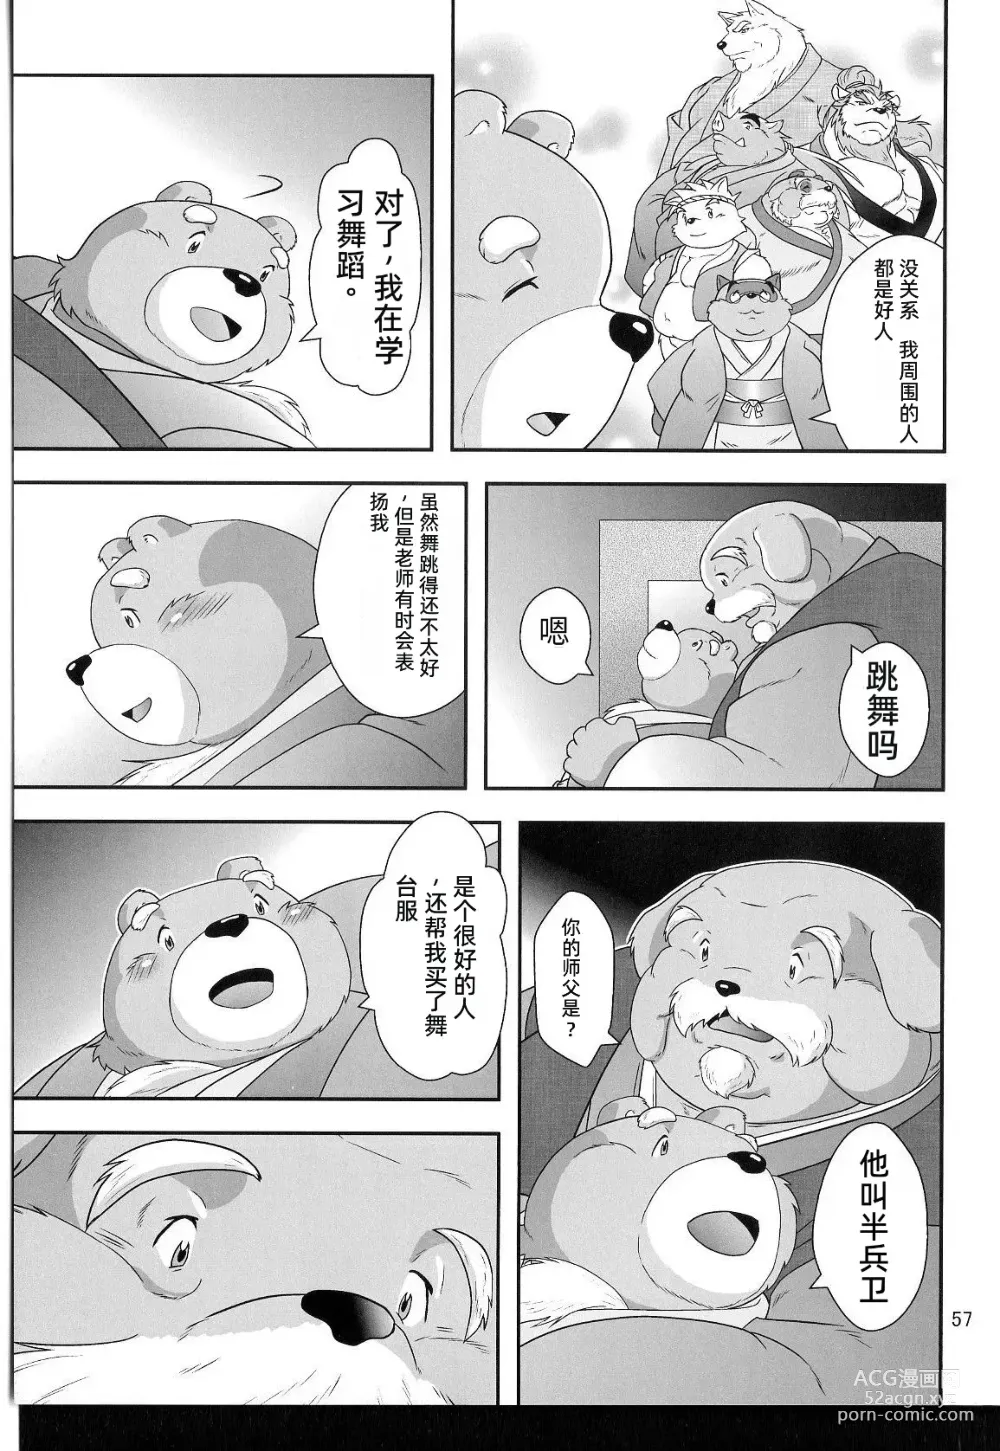 Page 56 of doujinshi 兽之楼郭 月华缭乱 月阴之章